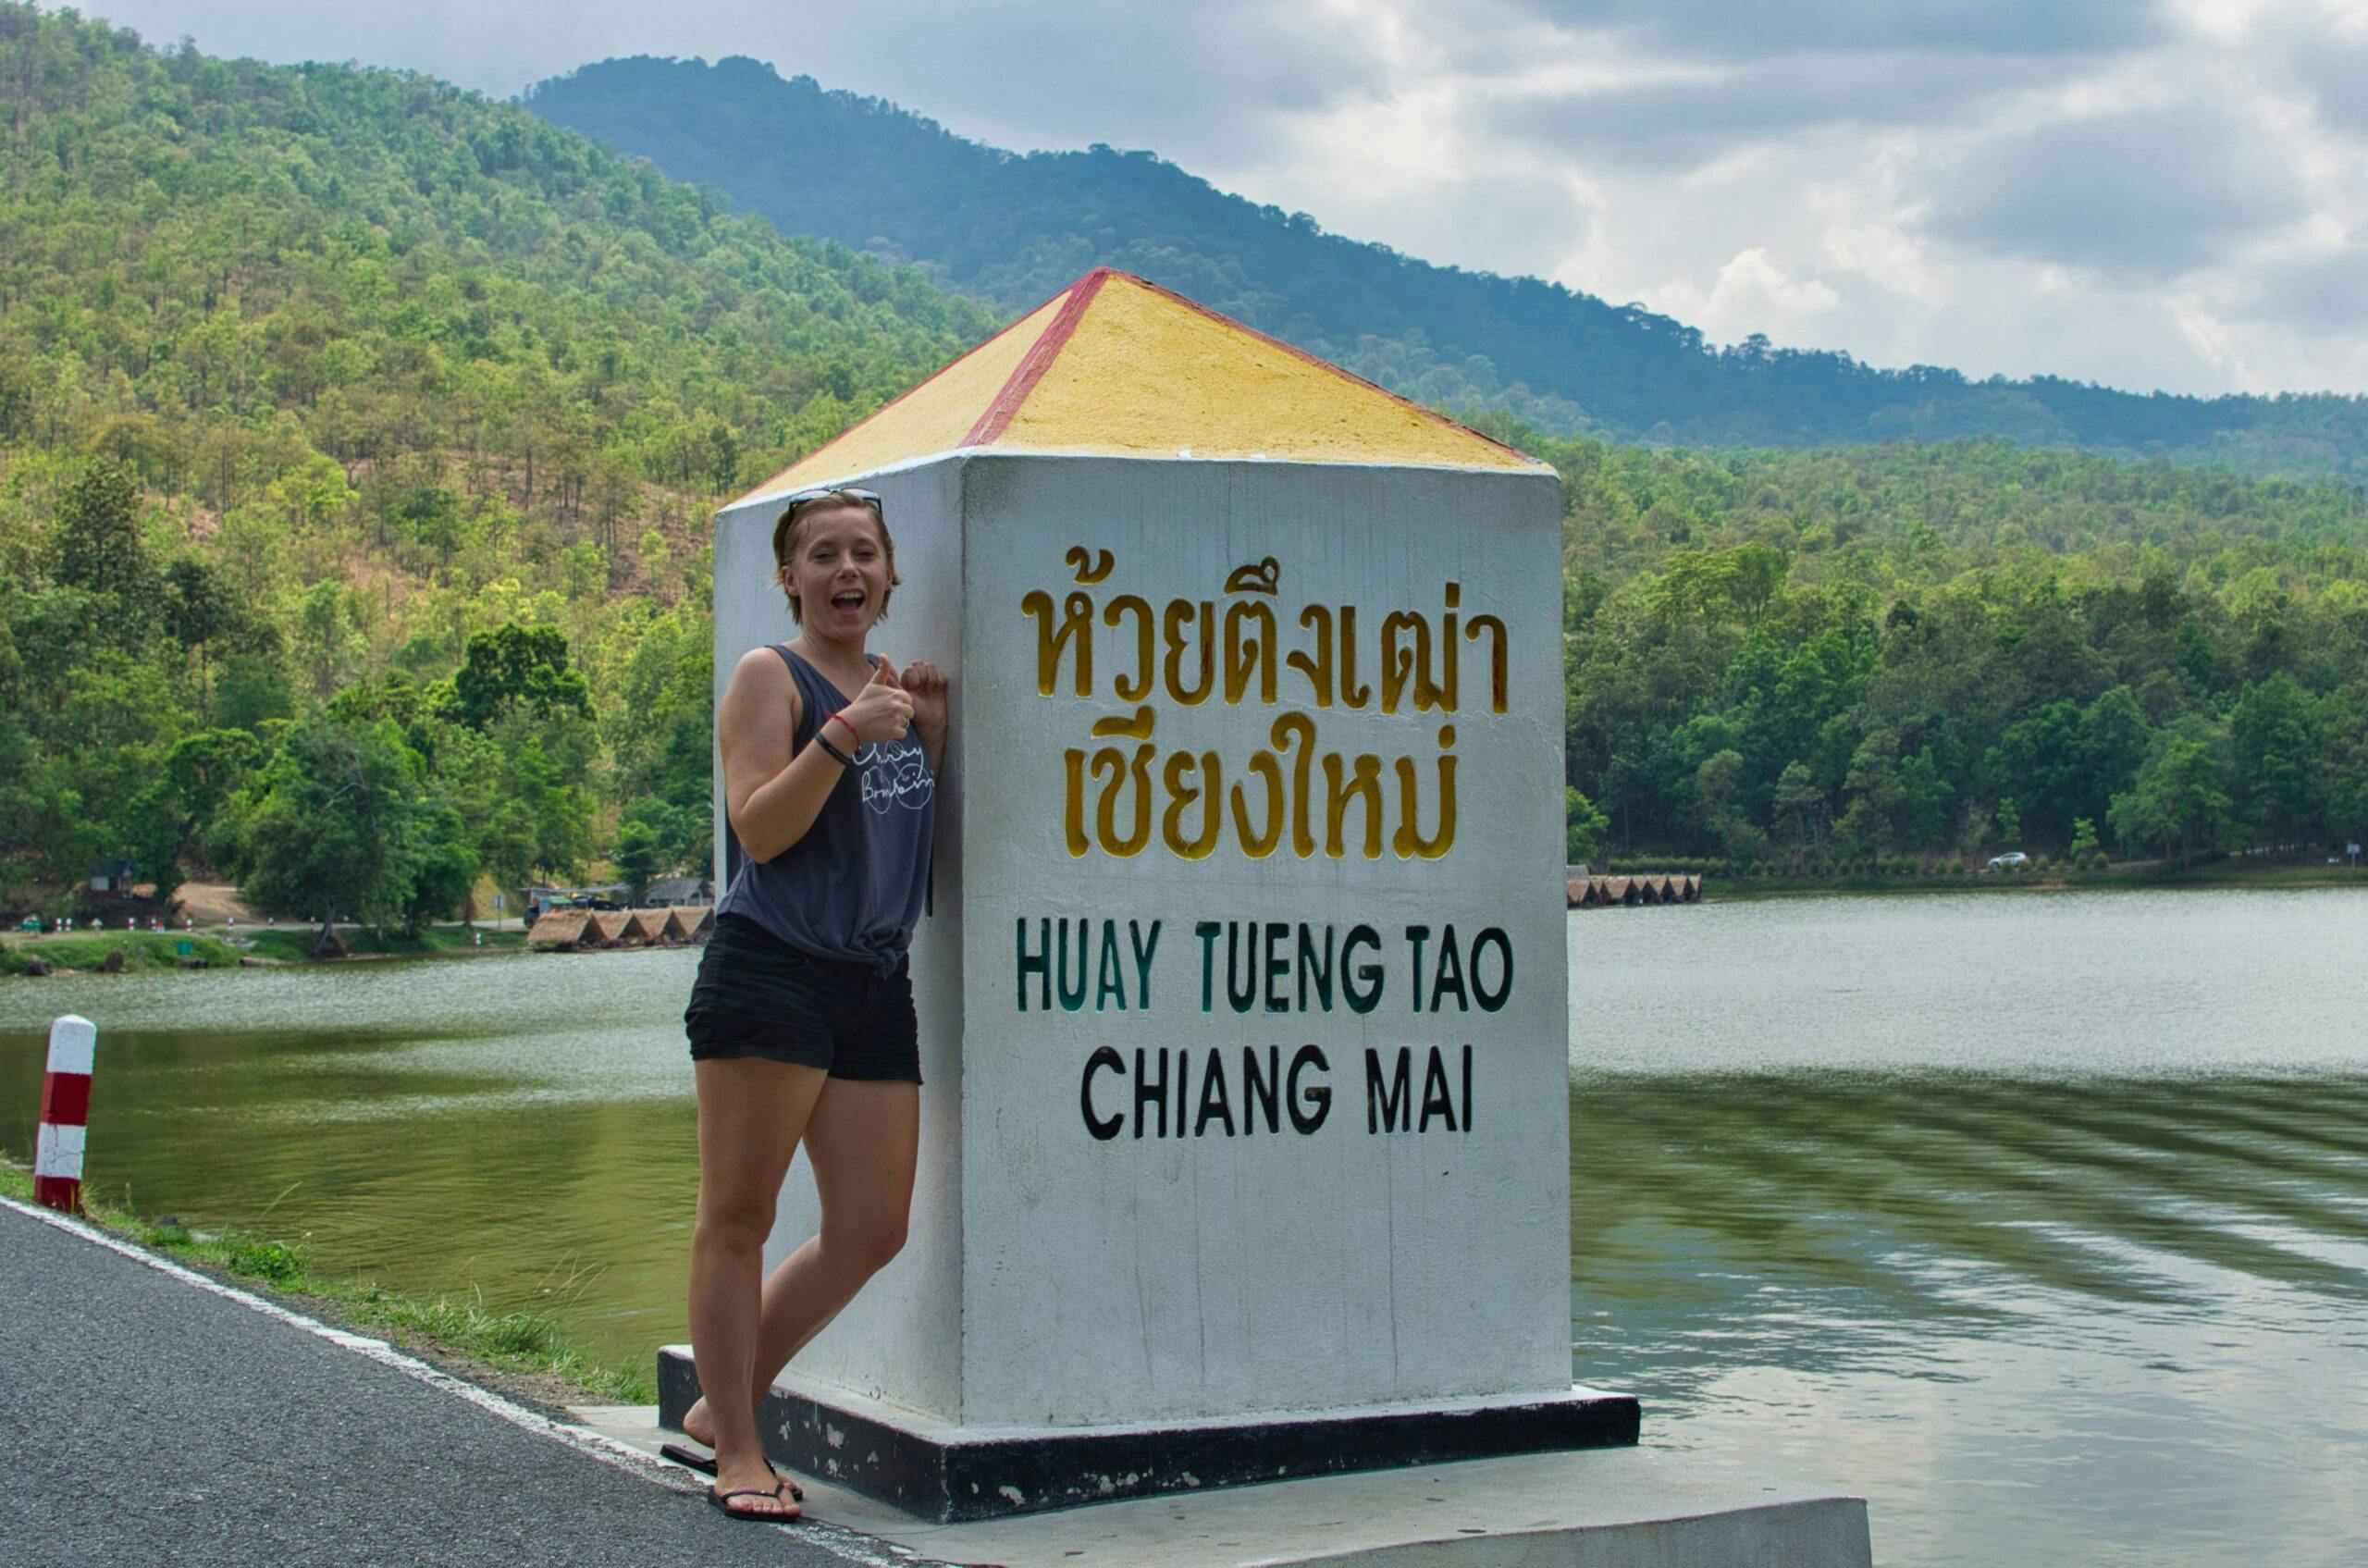 trat thailand travel guide